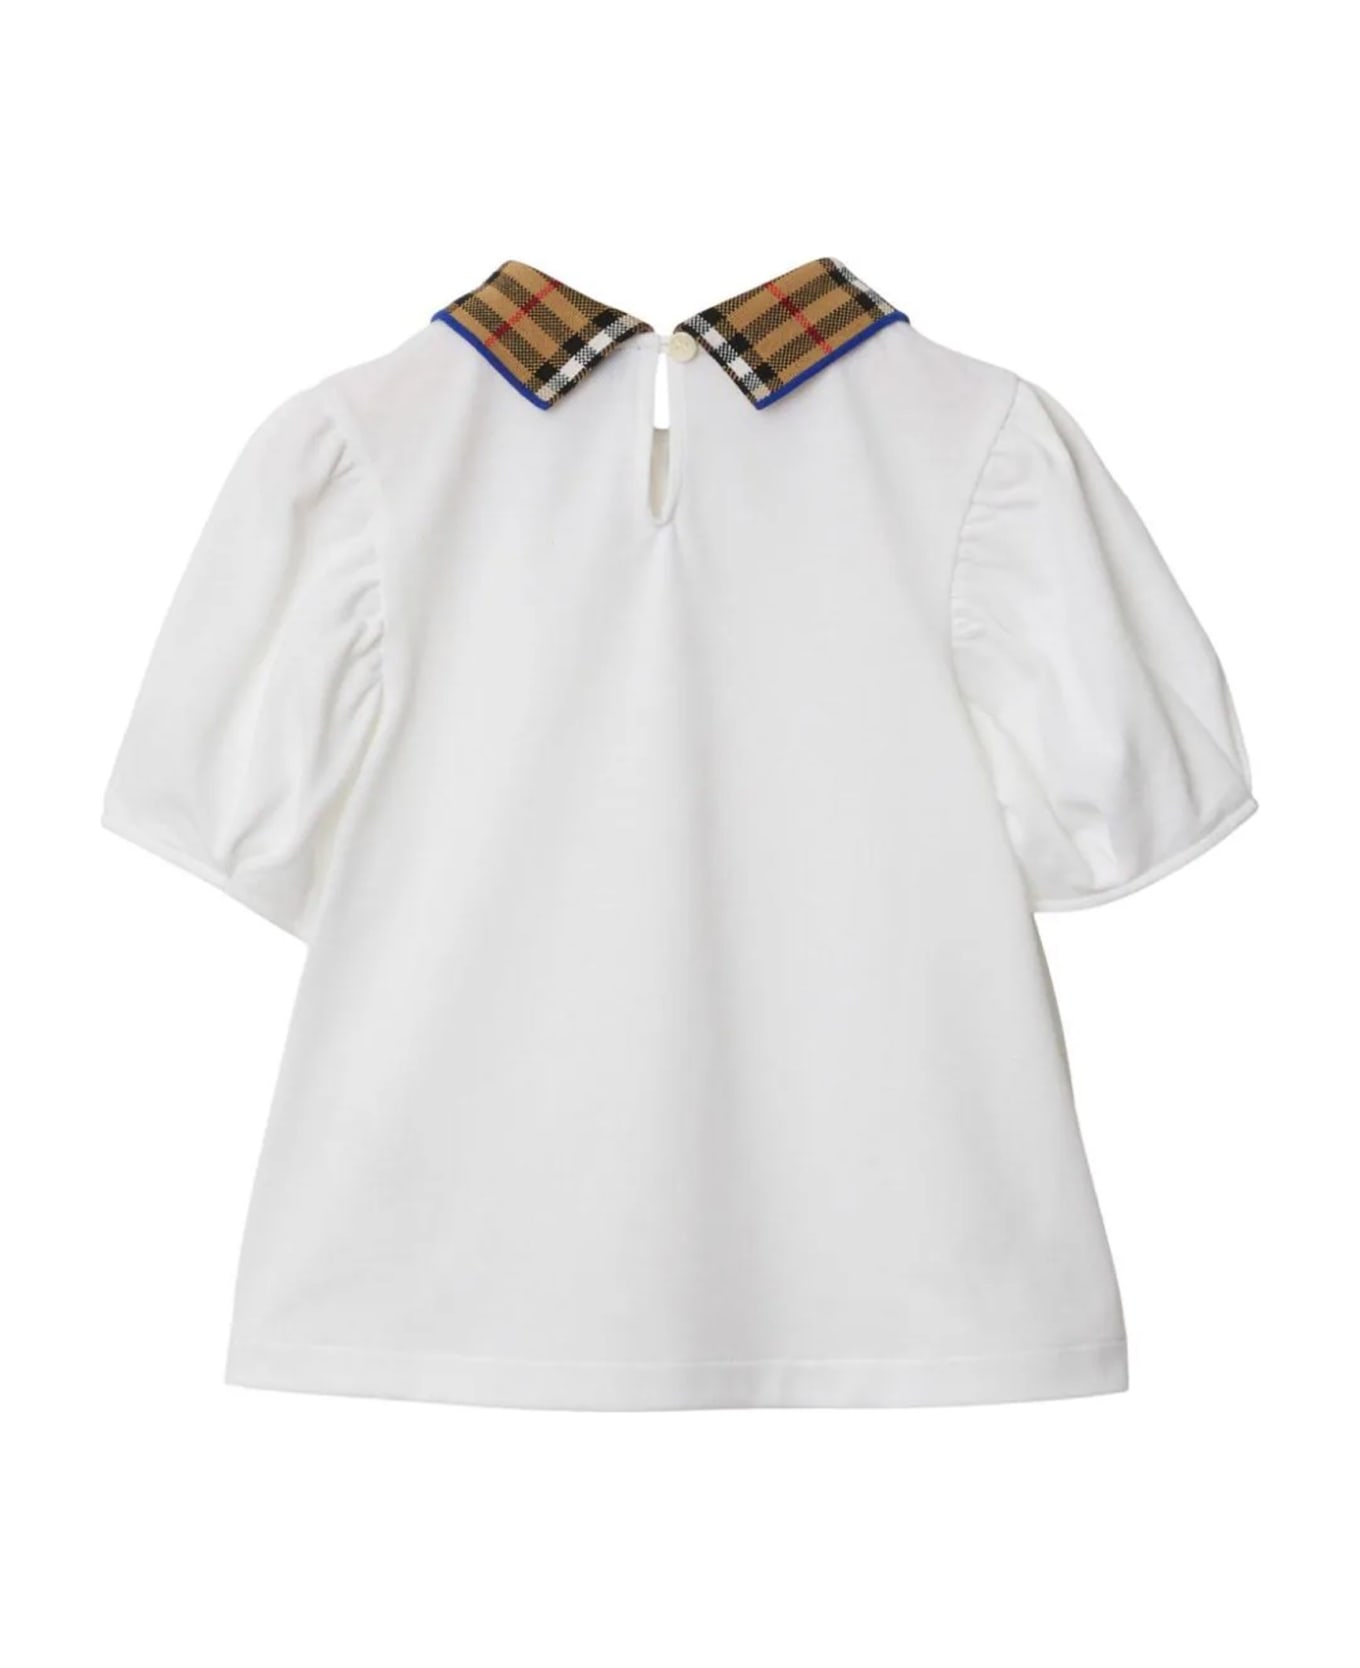 Burberry White Cotton Polo Shirt